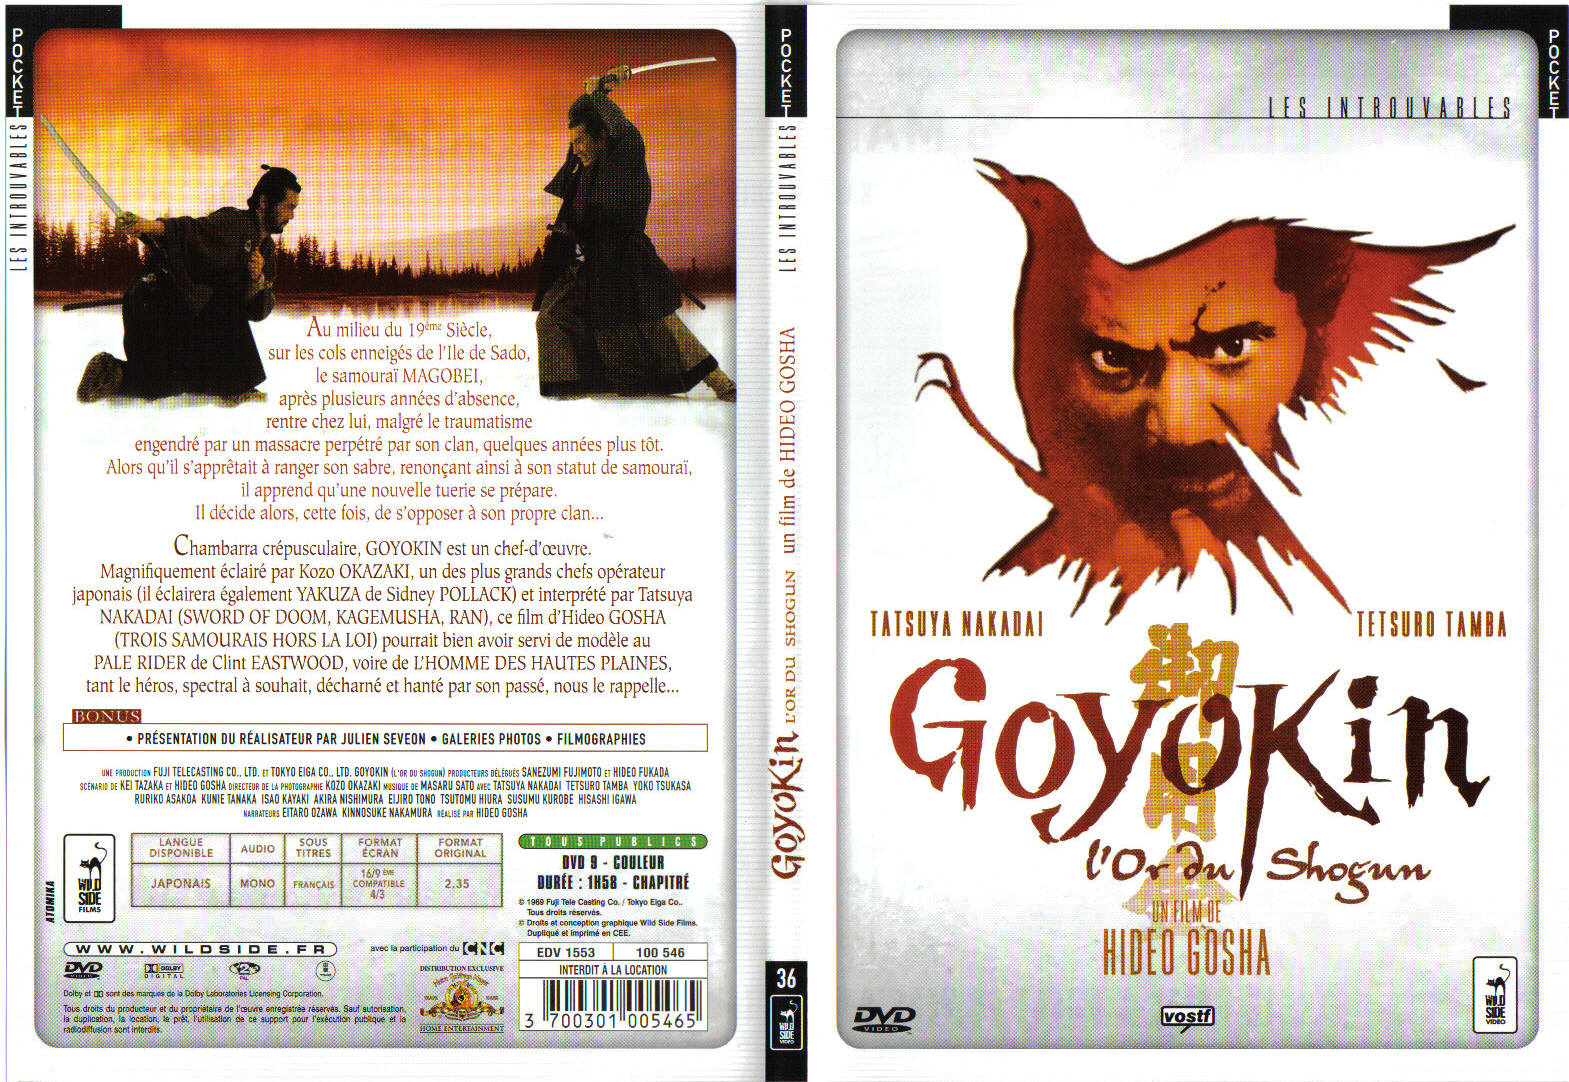 Jaquette DVD Goyokin - SLIM